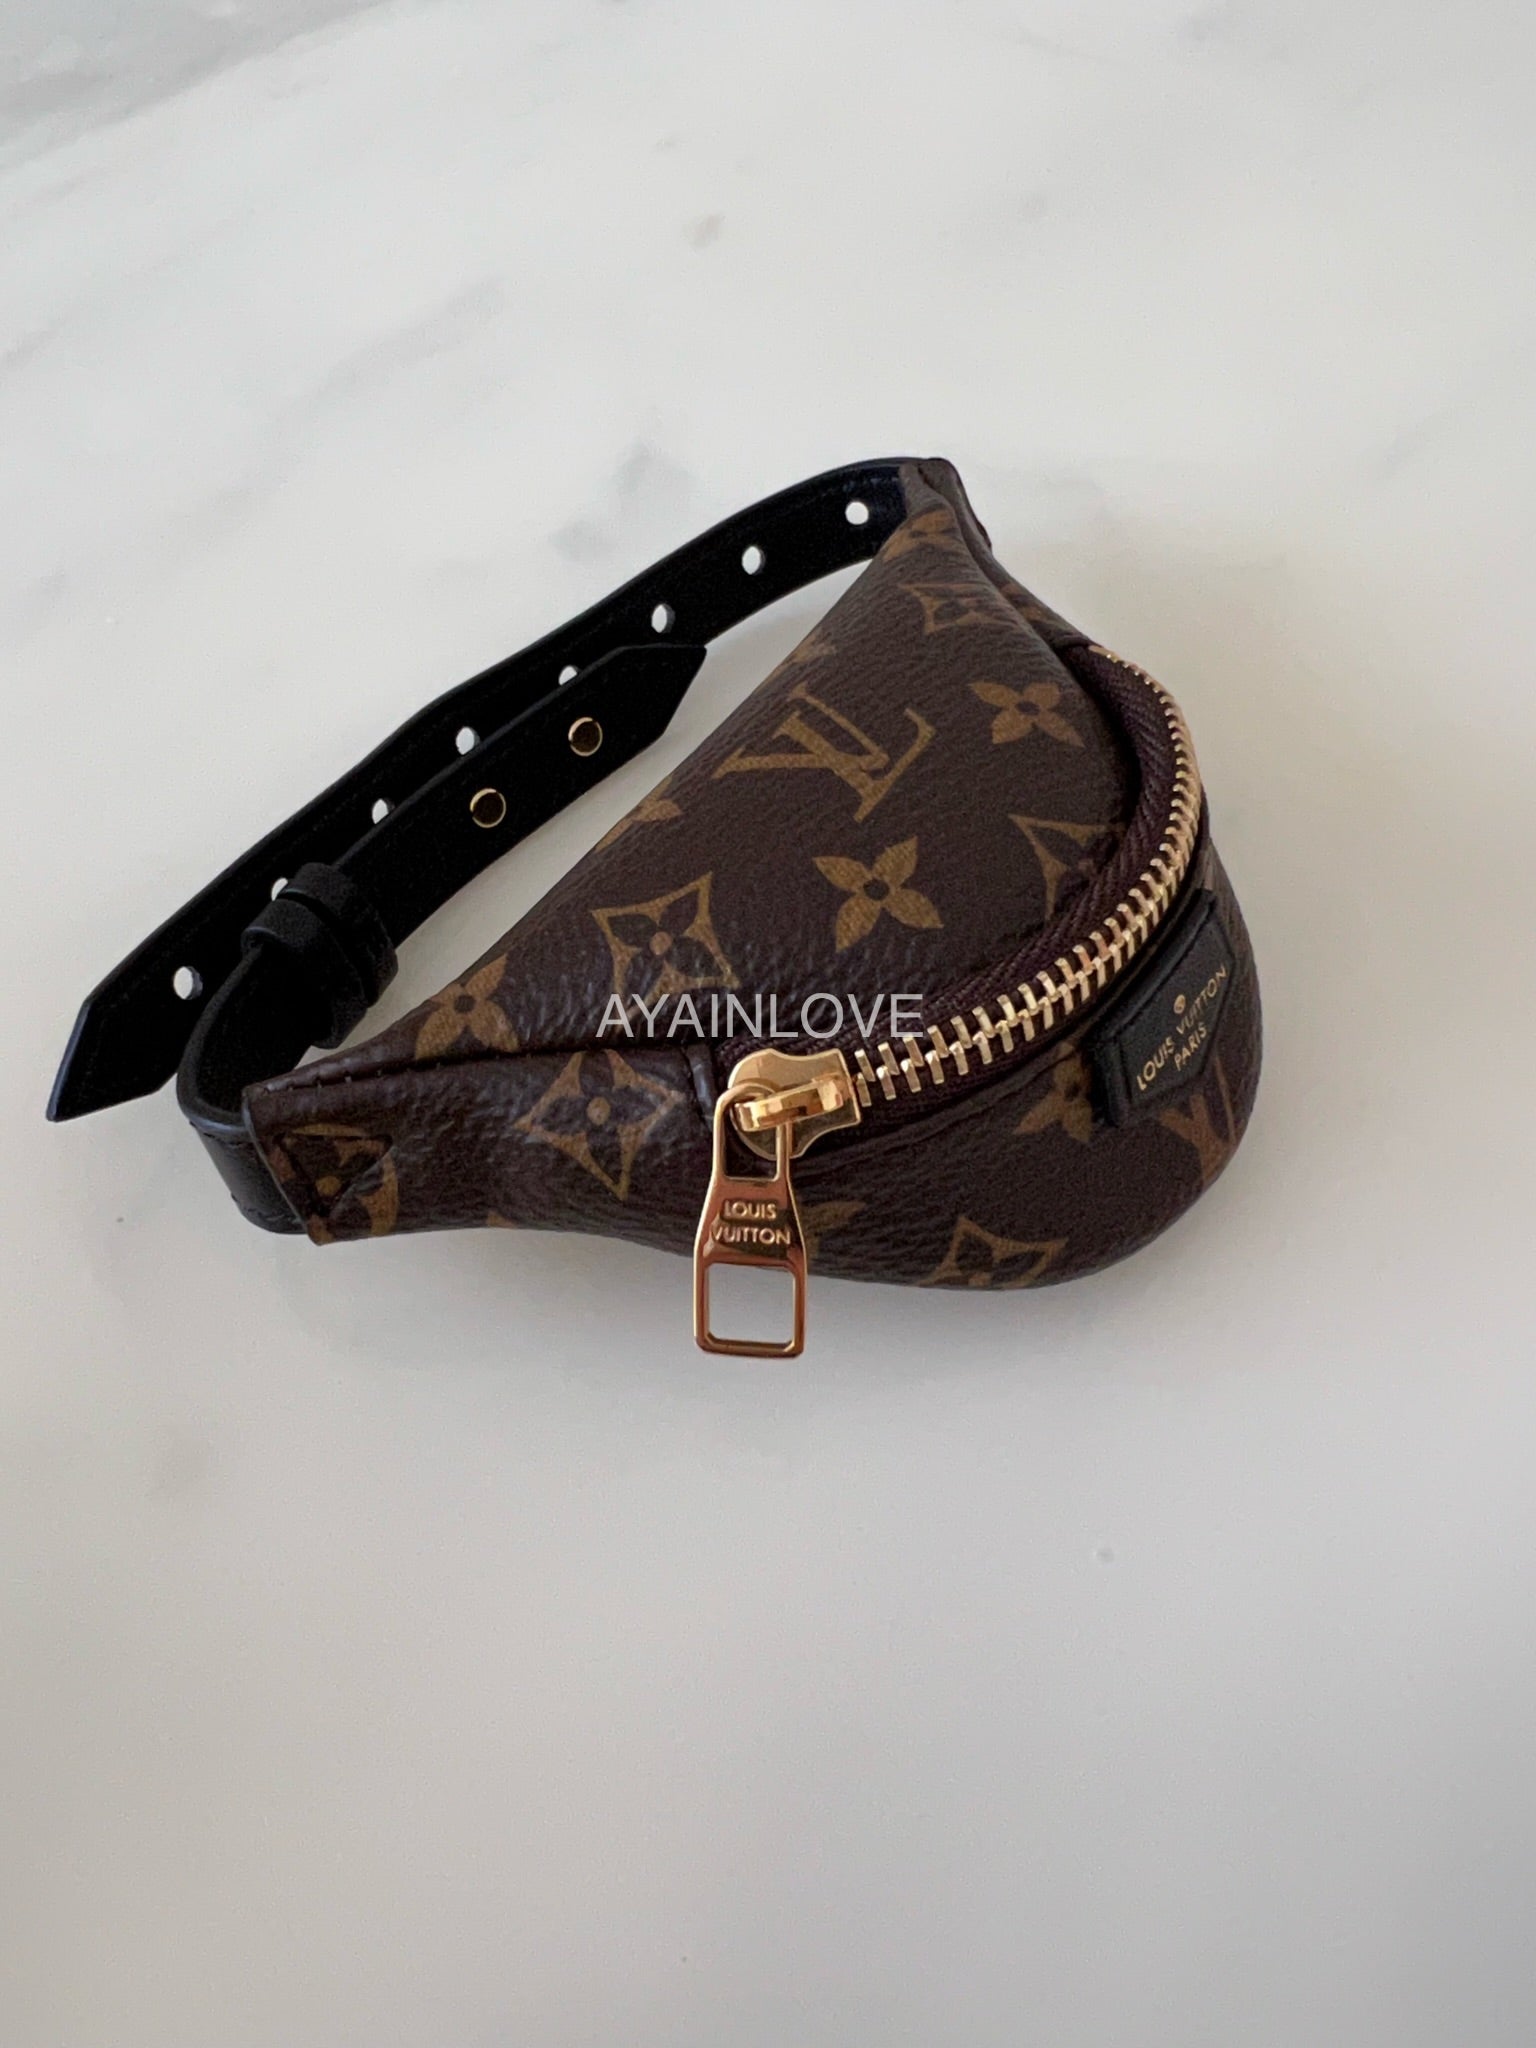 Louis Vuitton Party Bumbag Bracelet Monogram Brown